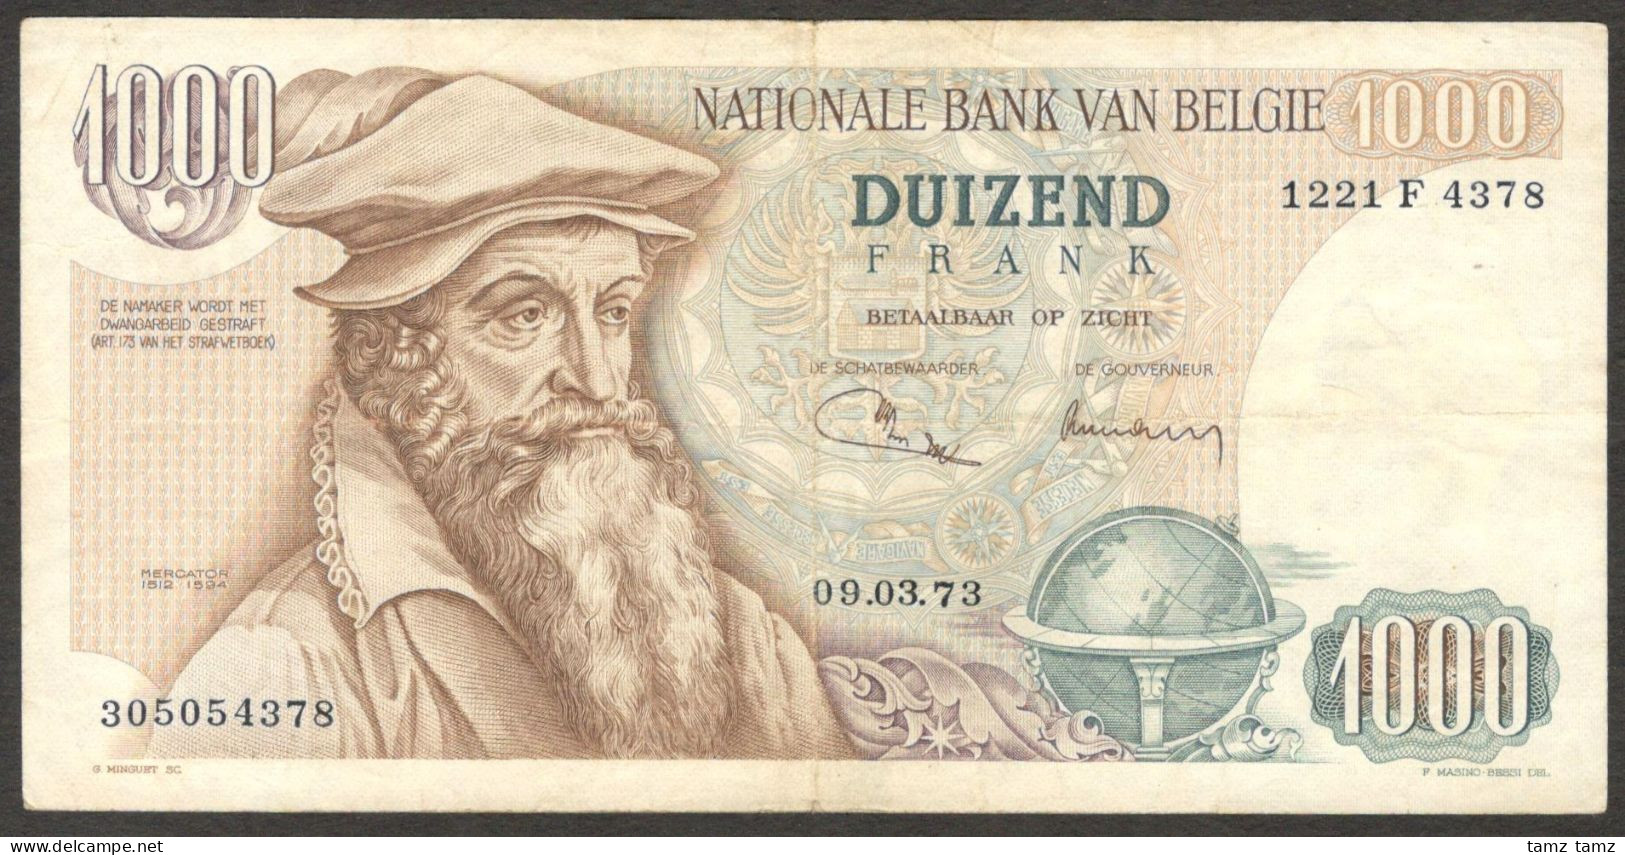 Belgia Belgium Belgique 1000 1,000 Francs Frank 1973 VF S/N 1221 F 4378 - 1000 Francs